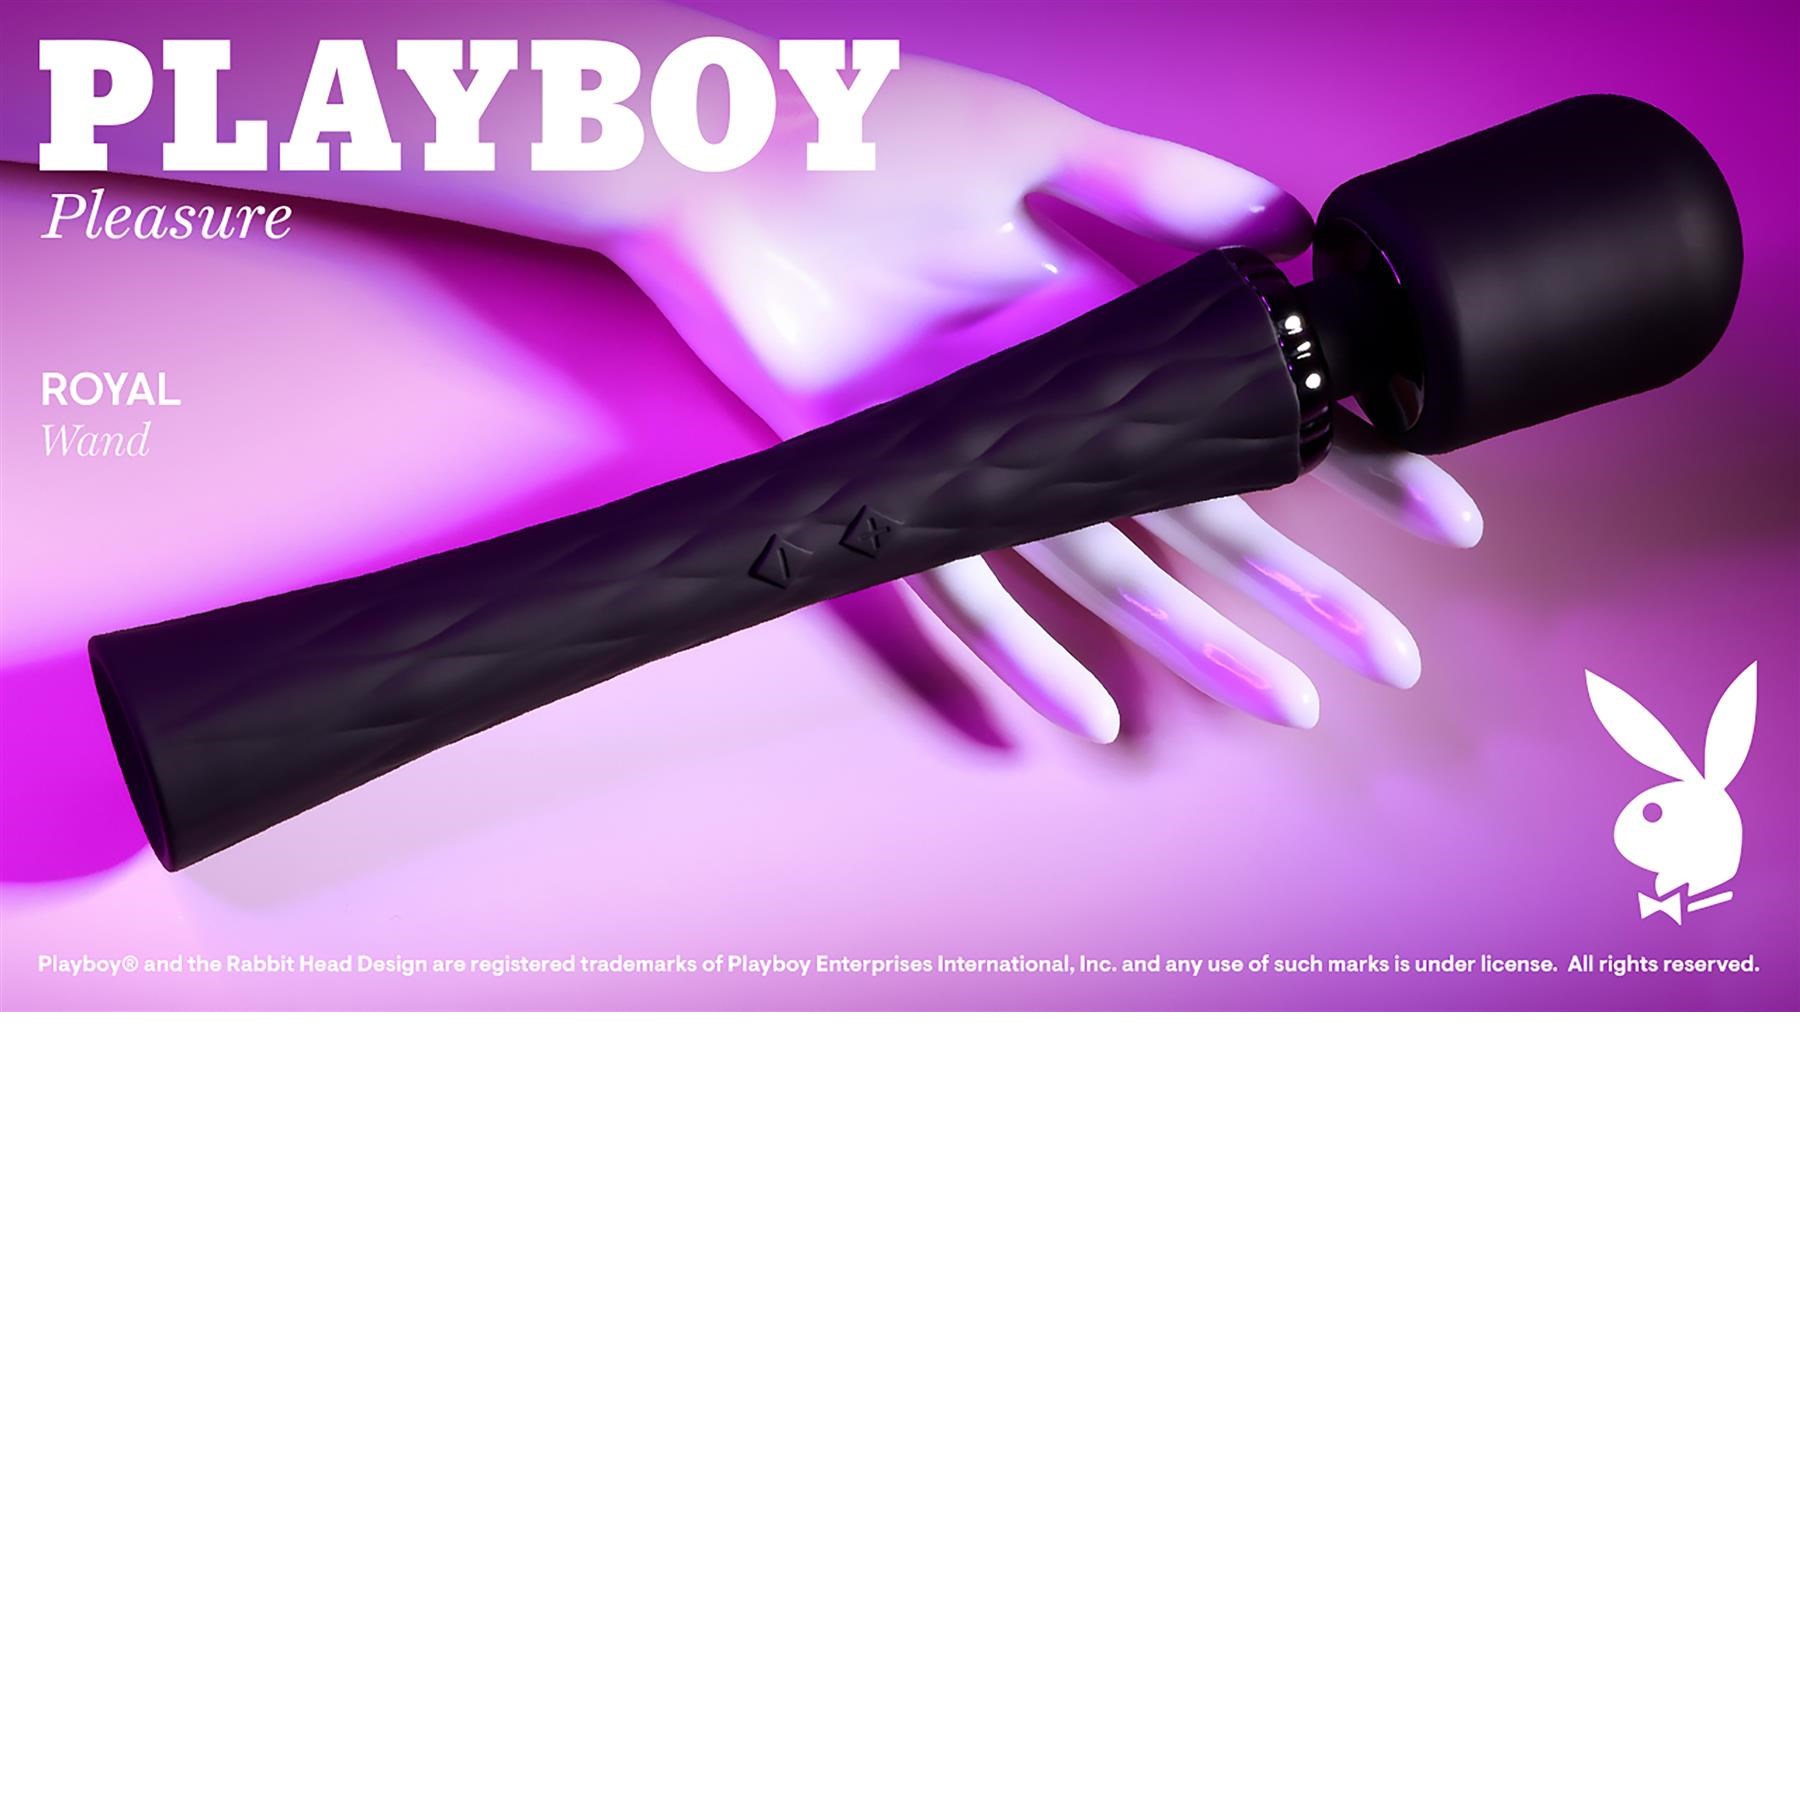 Playboy Pleasure Royal Wand Massager - Lifestyle Image